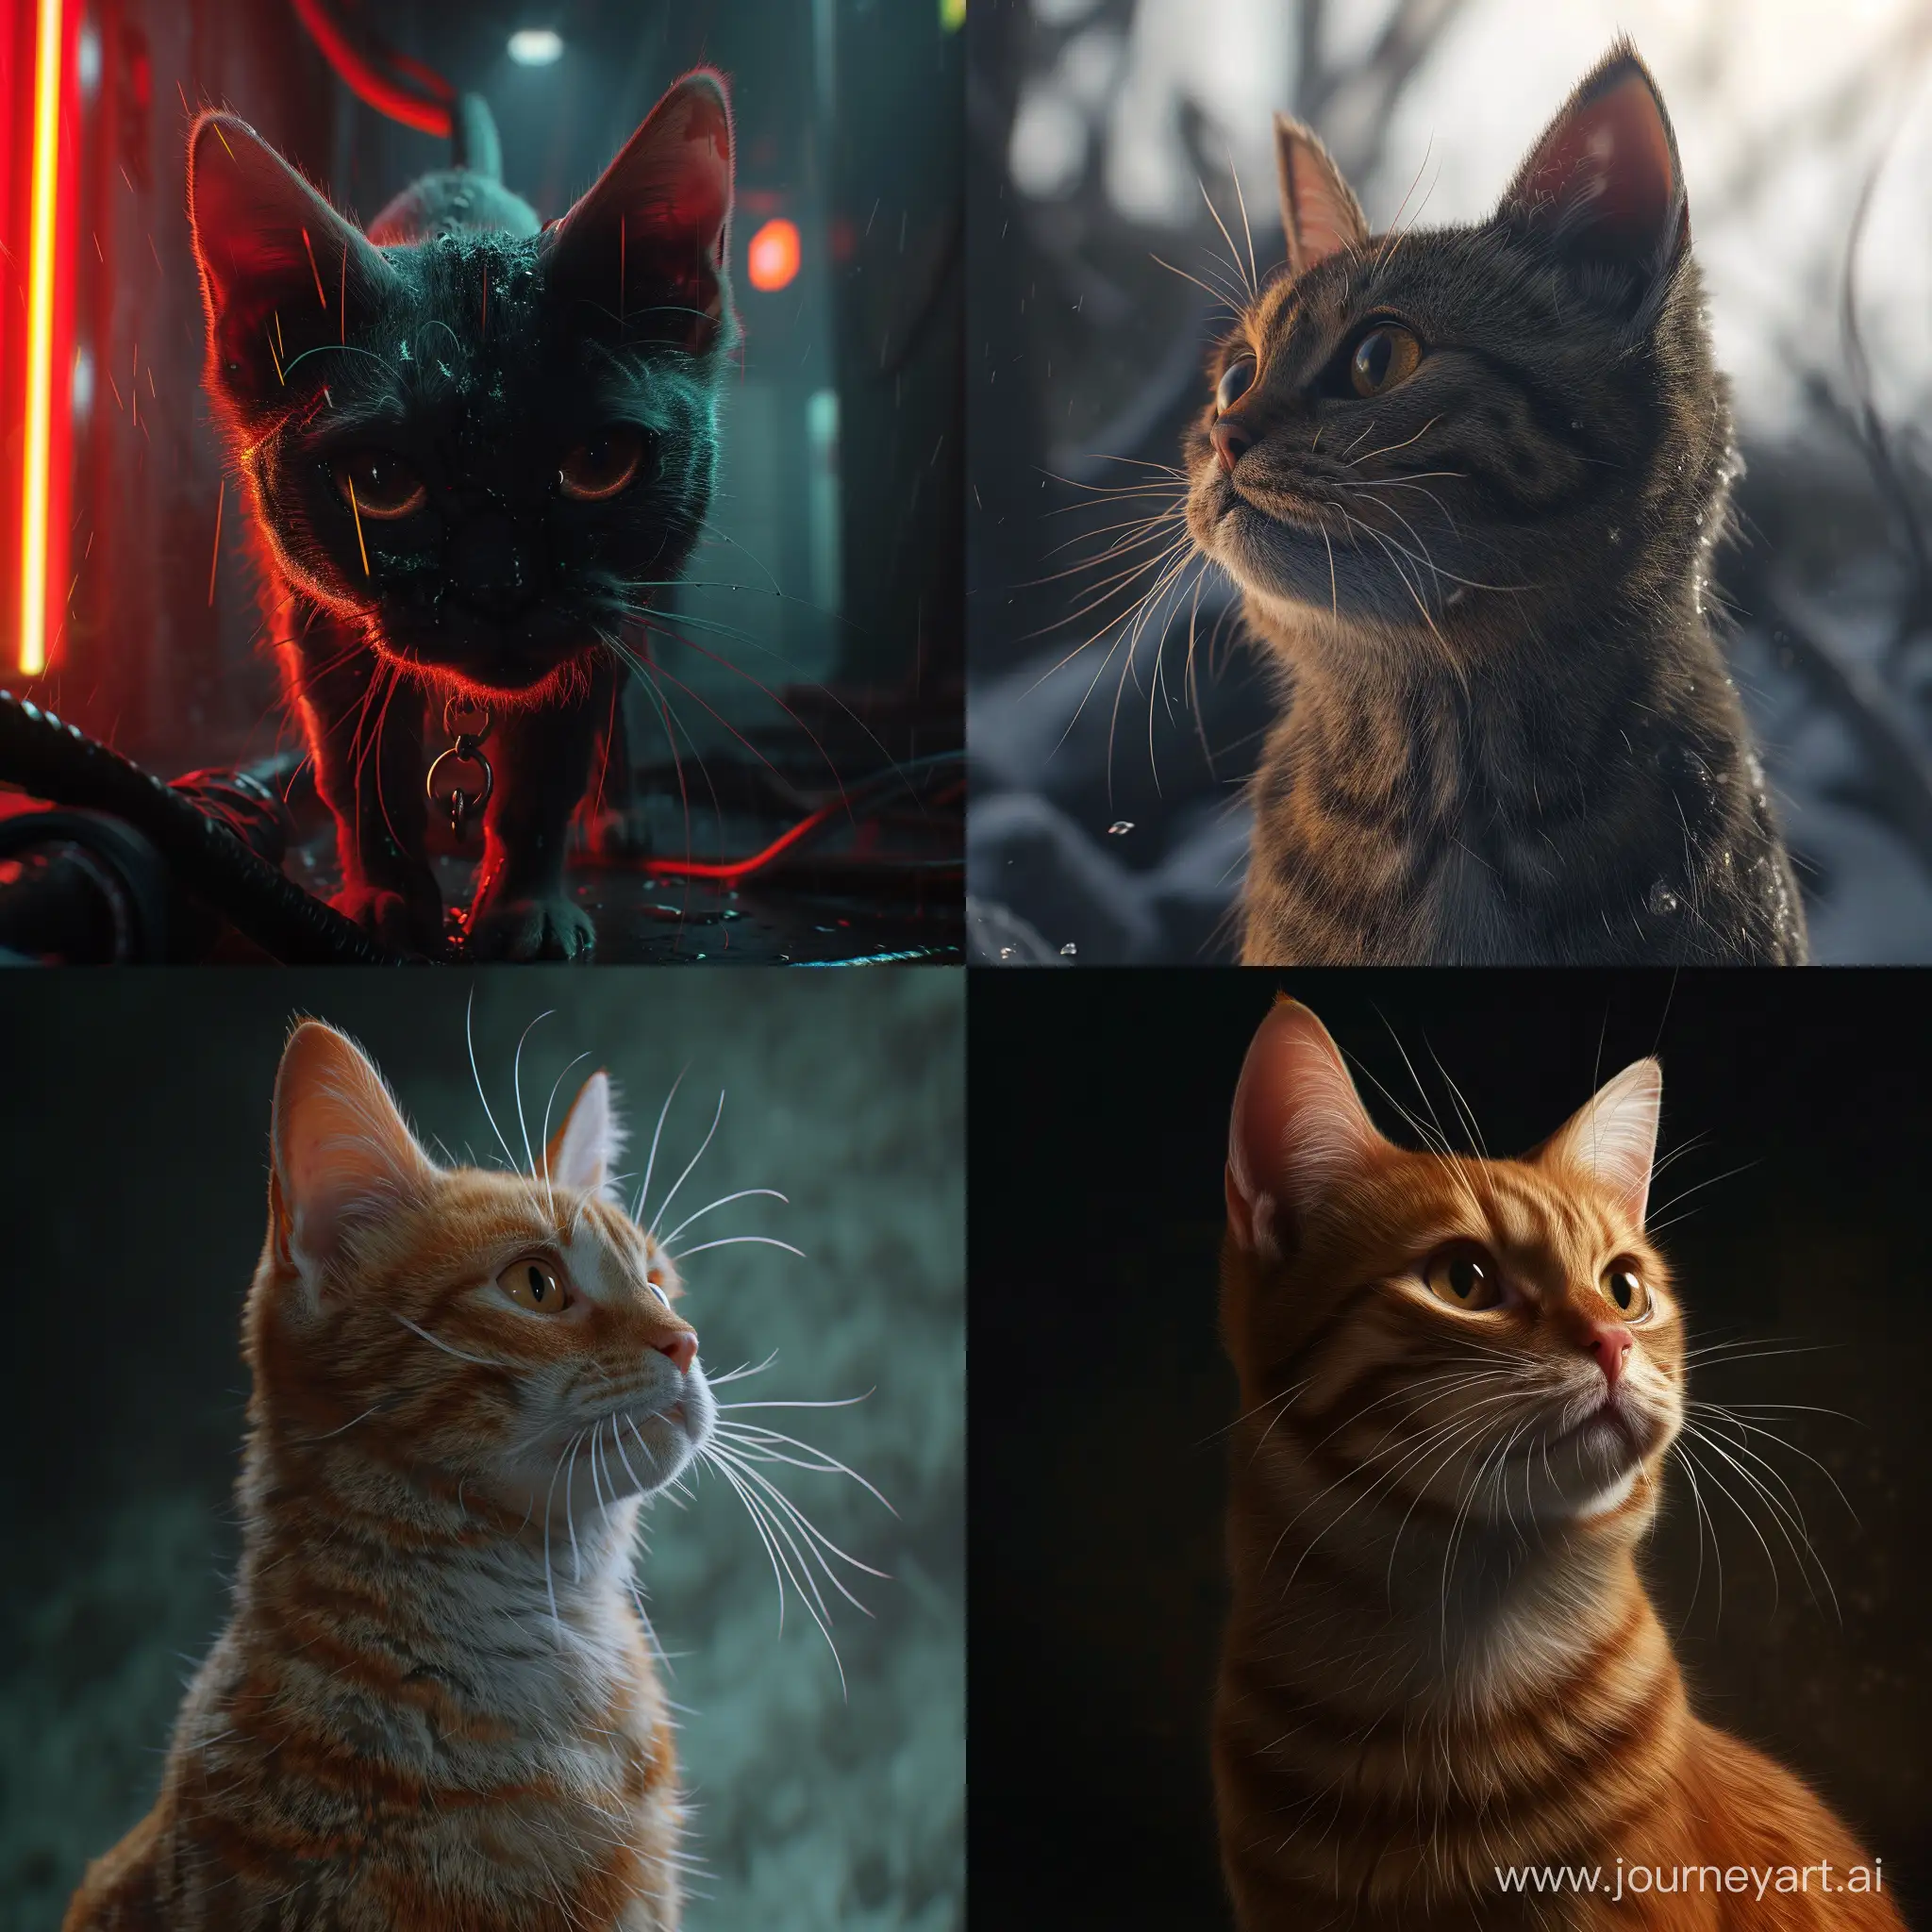 Cat game programmer, hyperrealism, cinematic, photorealistic 